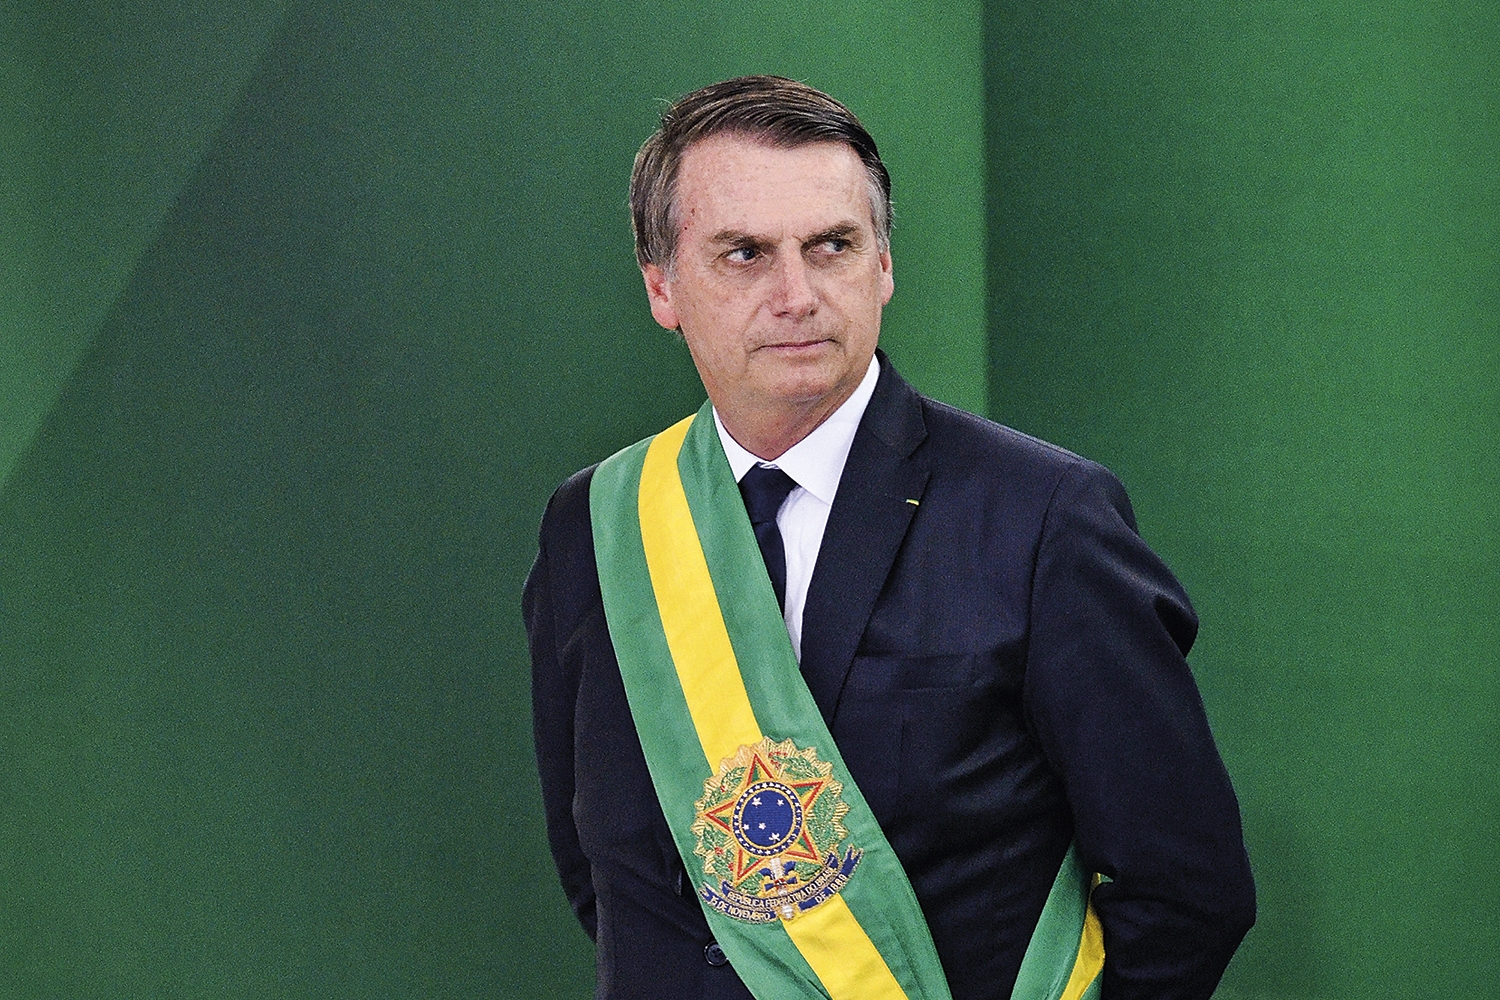 Who is Jair Bolsonaro The president of Brazil